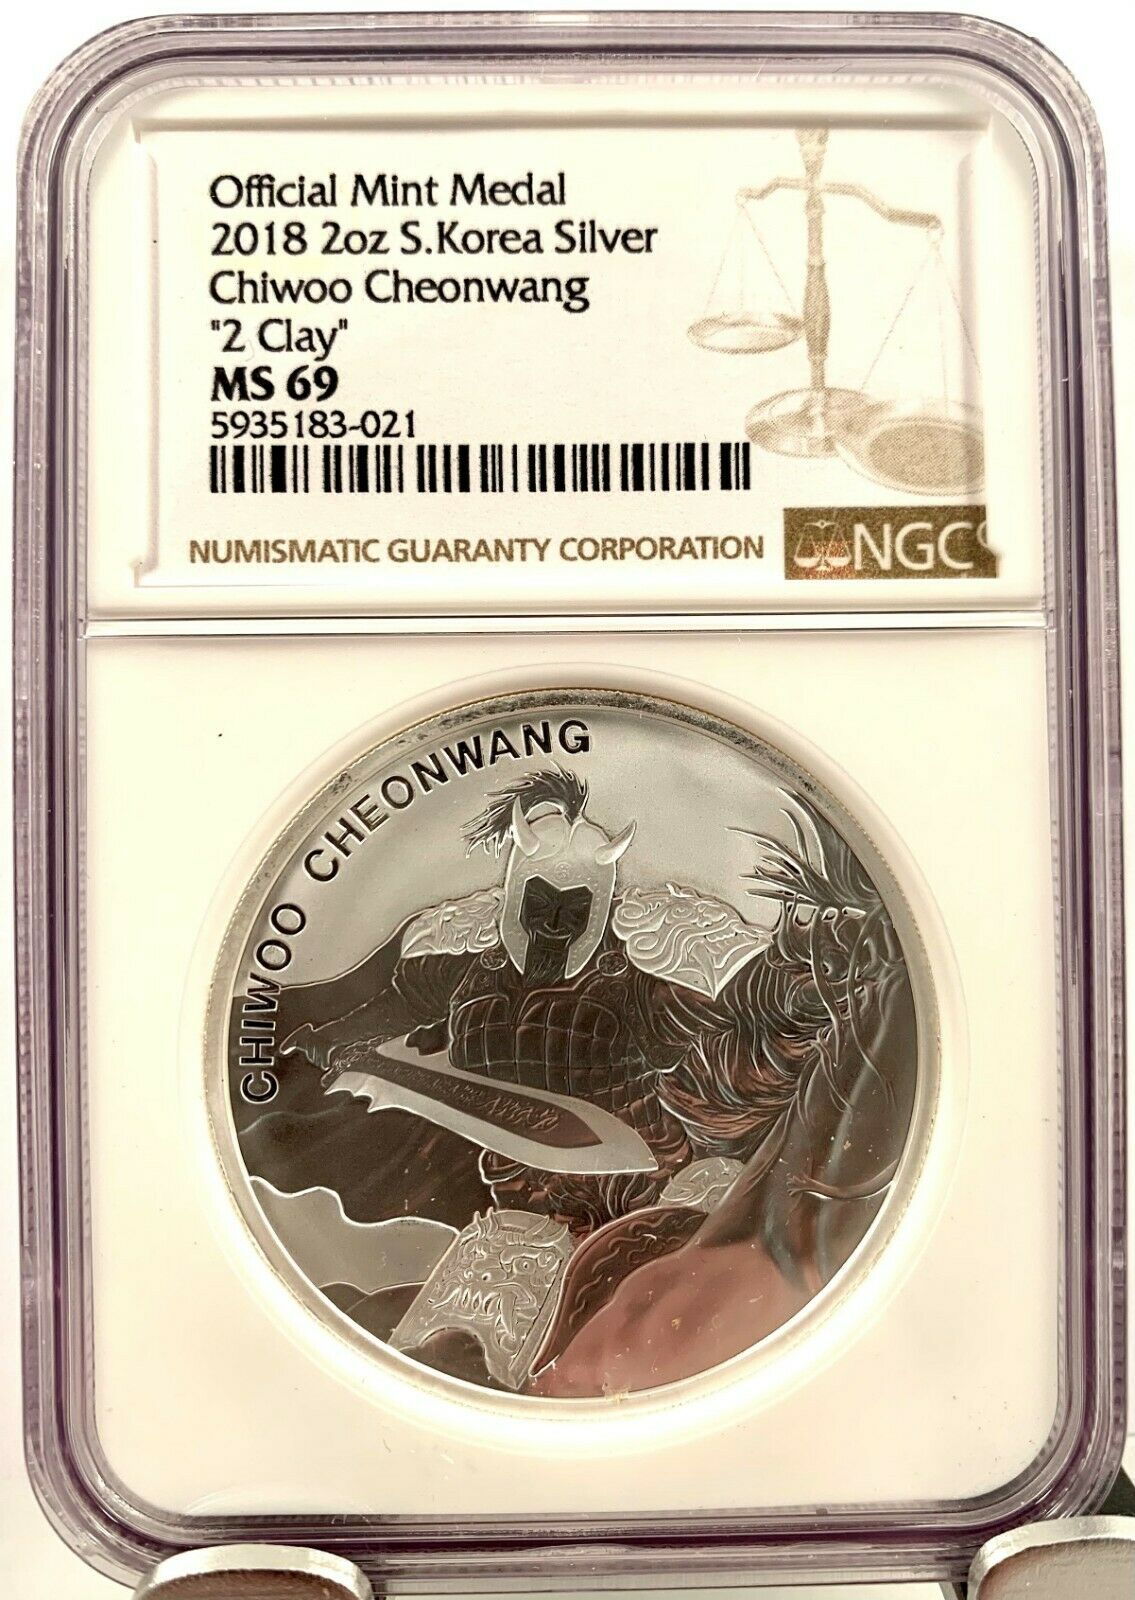 2018 Korea 2 Clay Chiwoo Cheonwang Incuse 2 Oz .999 Silver Coin - Ngc Ms 69